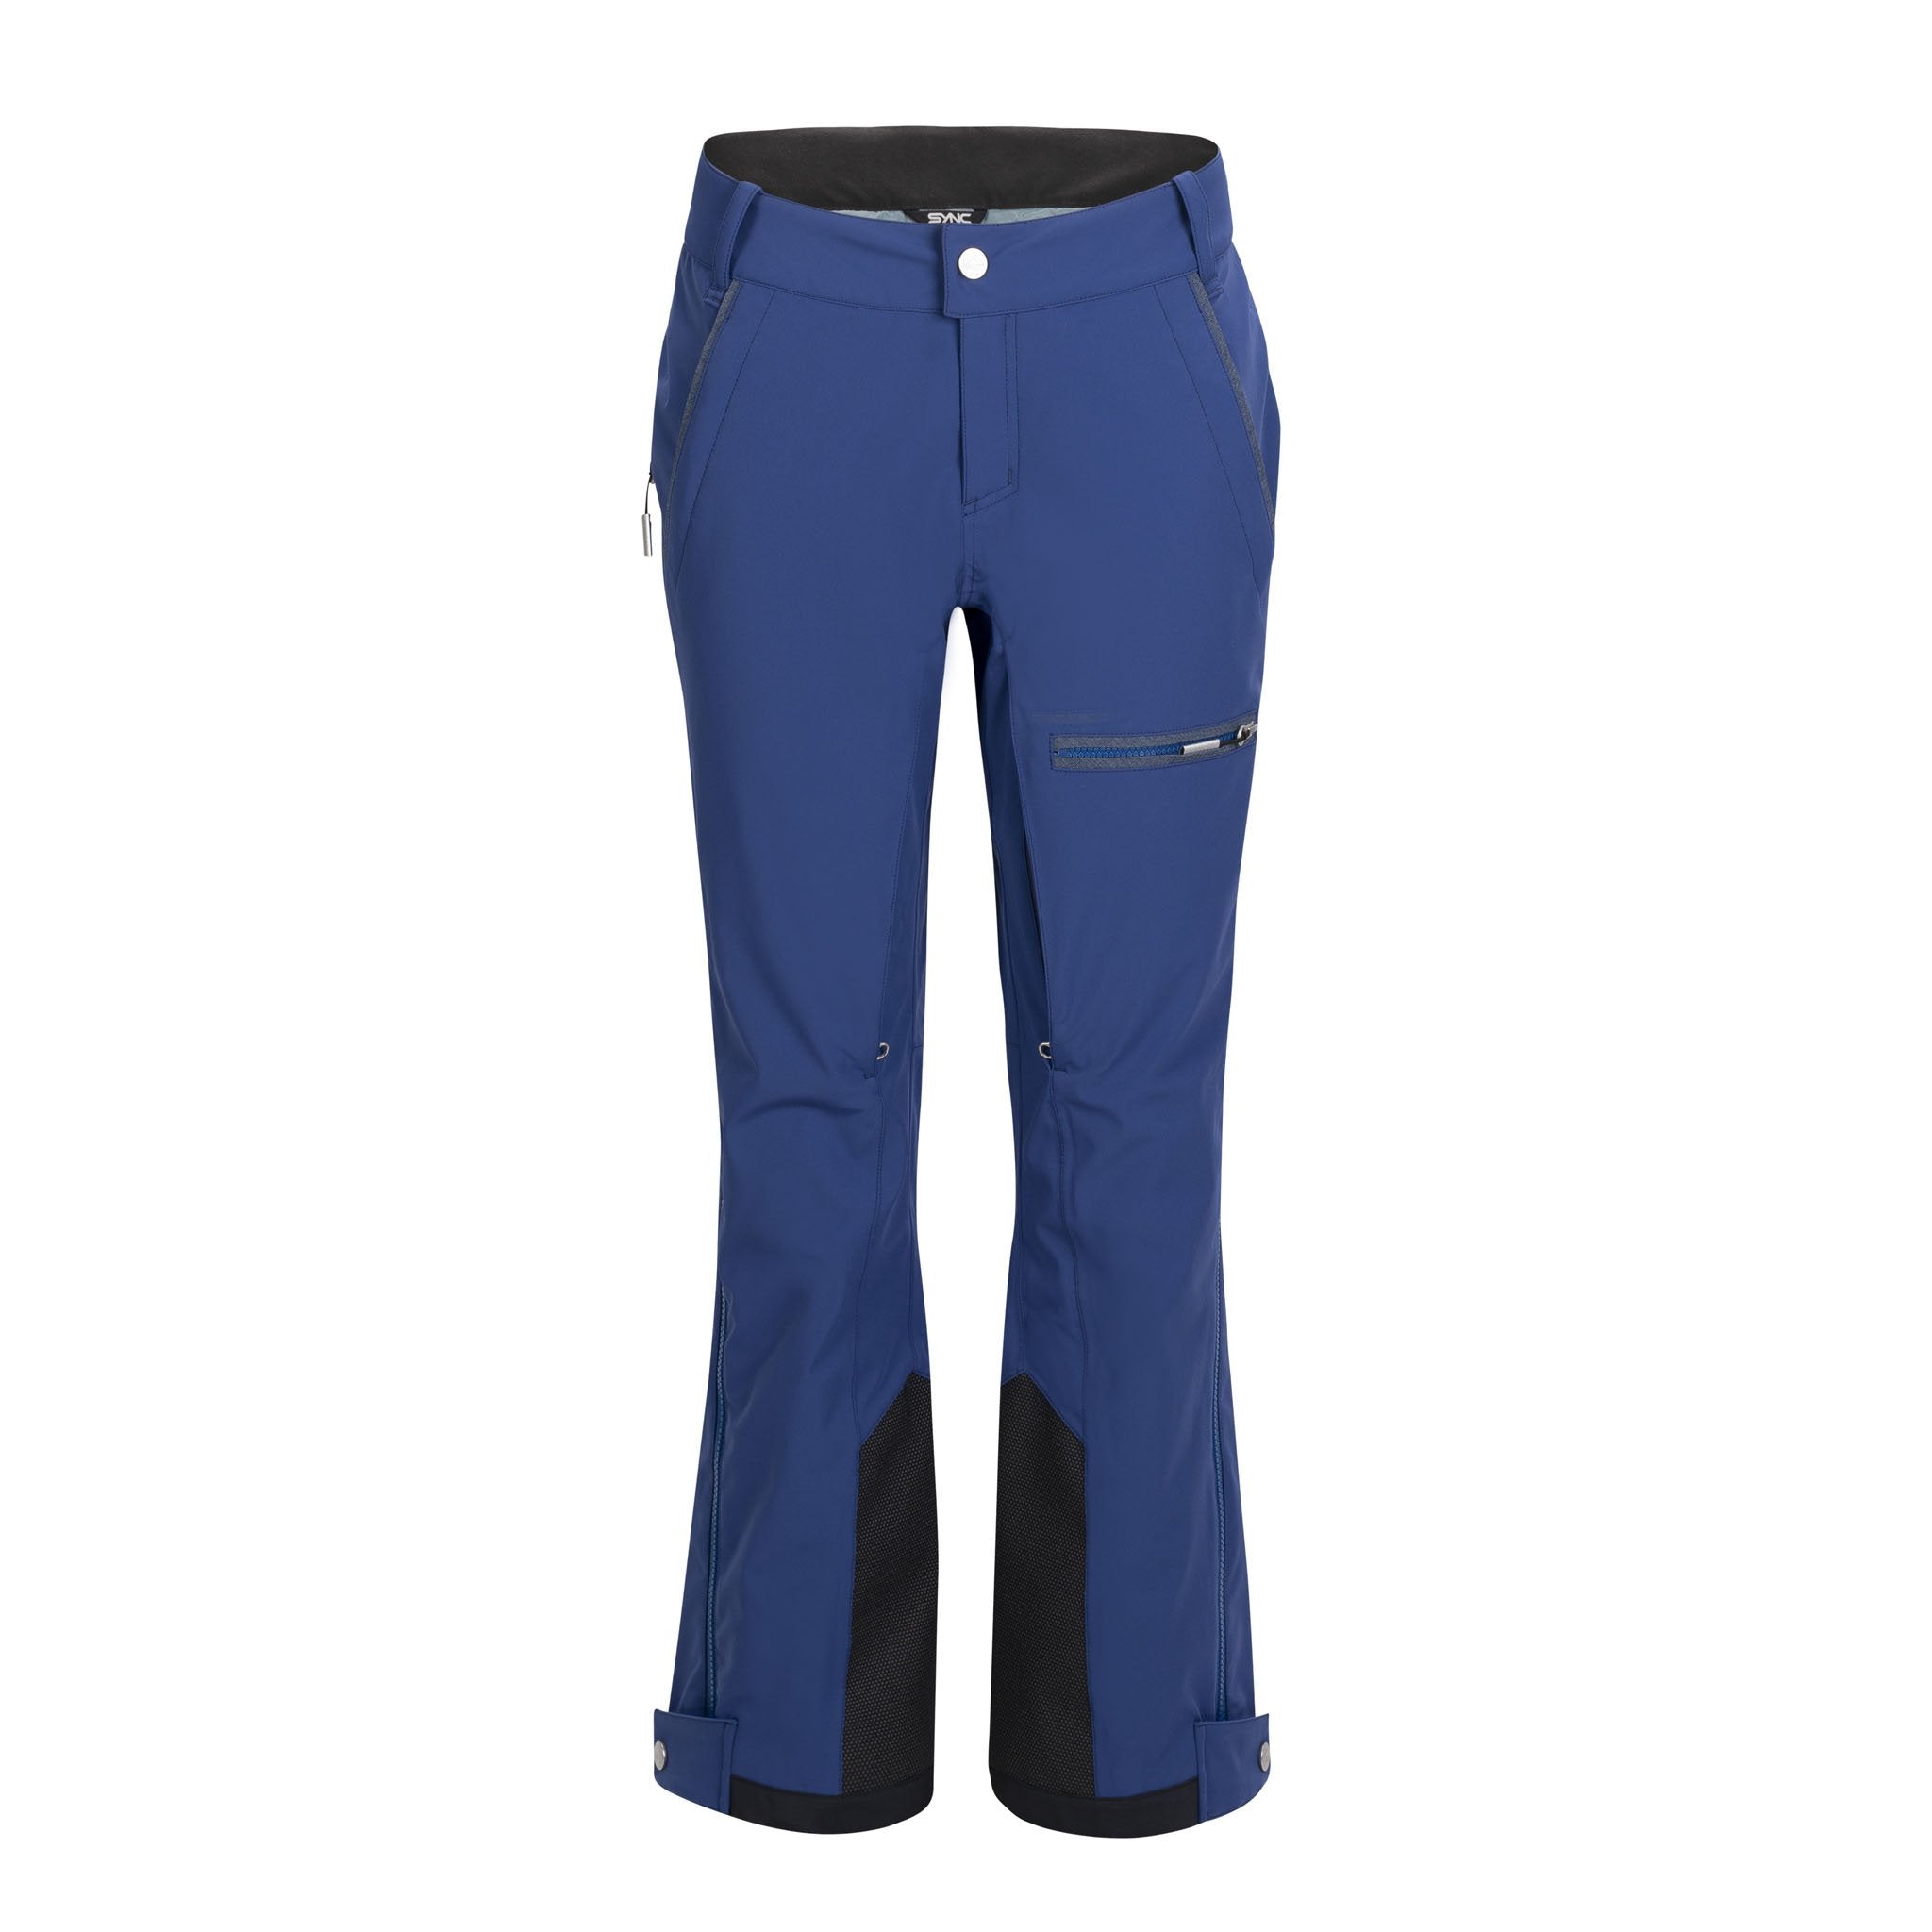 sync-performance-womens-8120-zip-off-ski-pant-twilight-blue-front